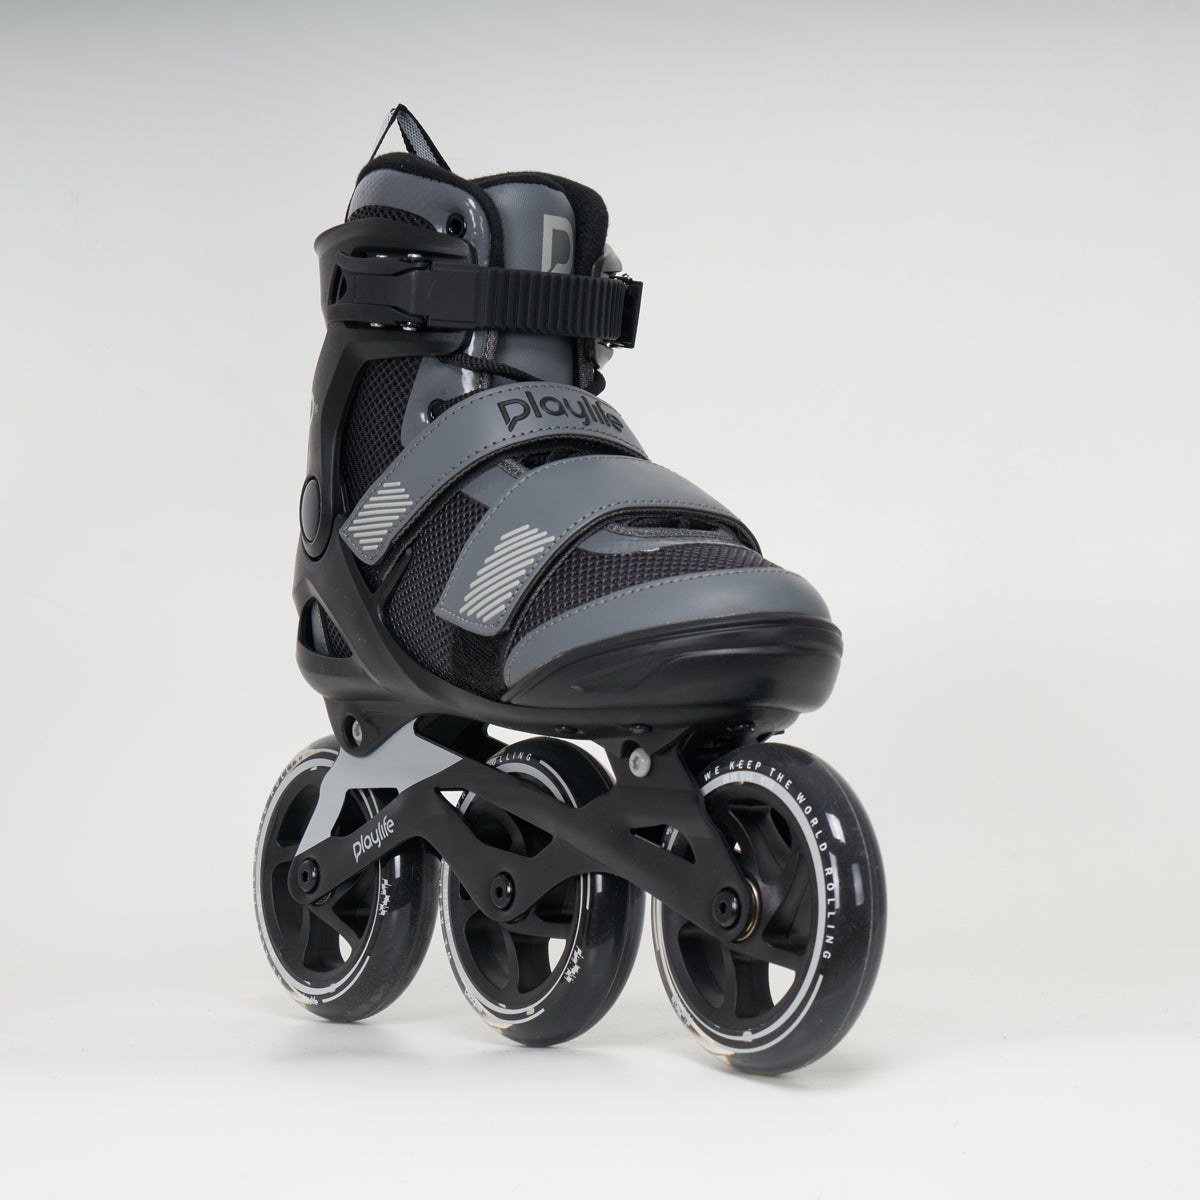 Playlife GT 110 Unisex Skates - Black / Grey